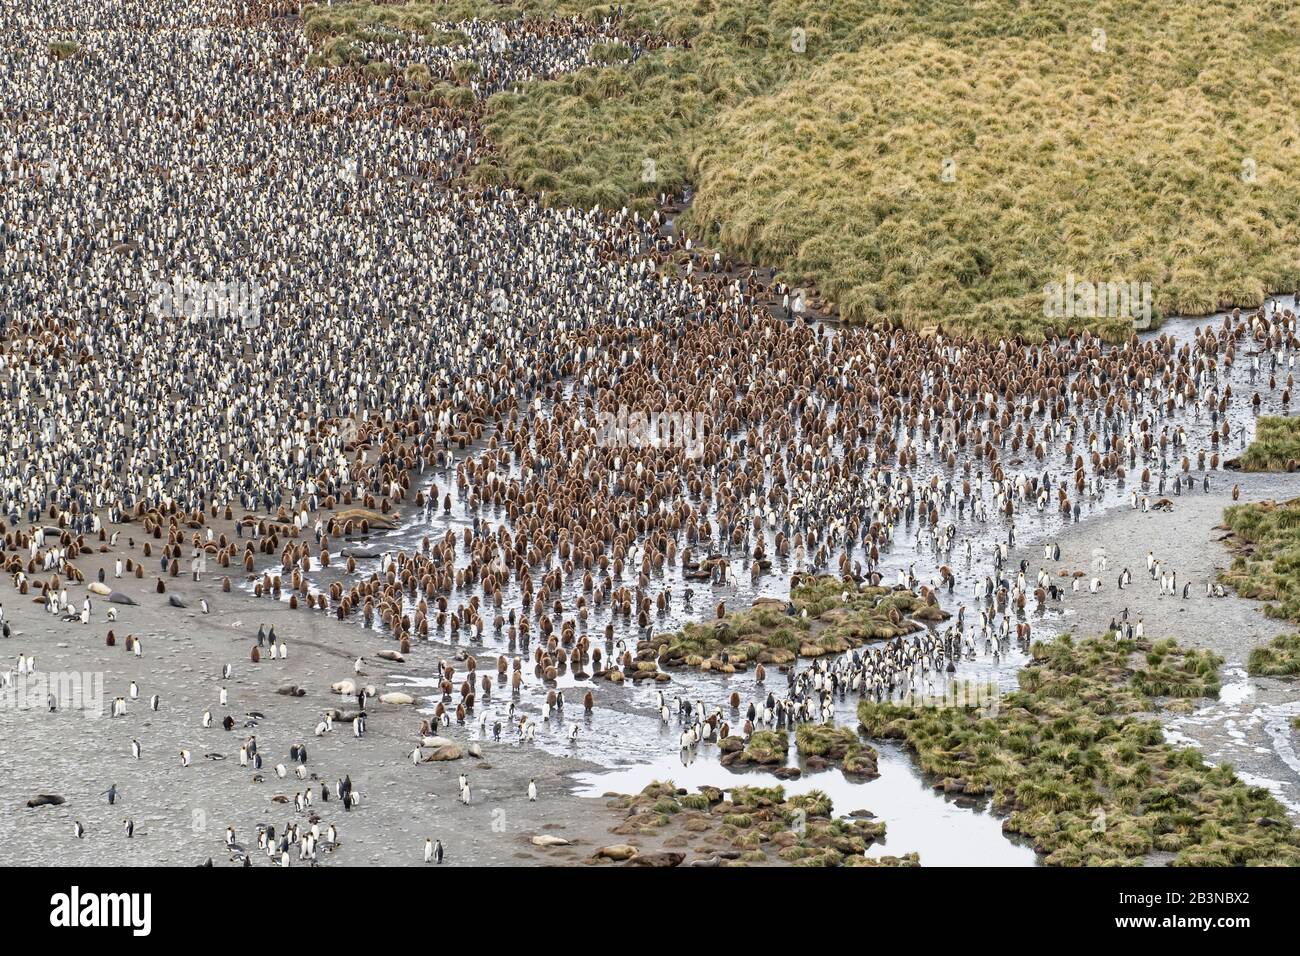 King-Pinguine und Elefantendichtungen bedecken den Strand in Gold Harbor, Südgeorgien, UK Overseas Protectorate, Polar Regions Stockfoto